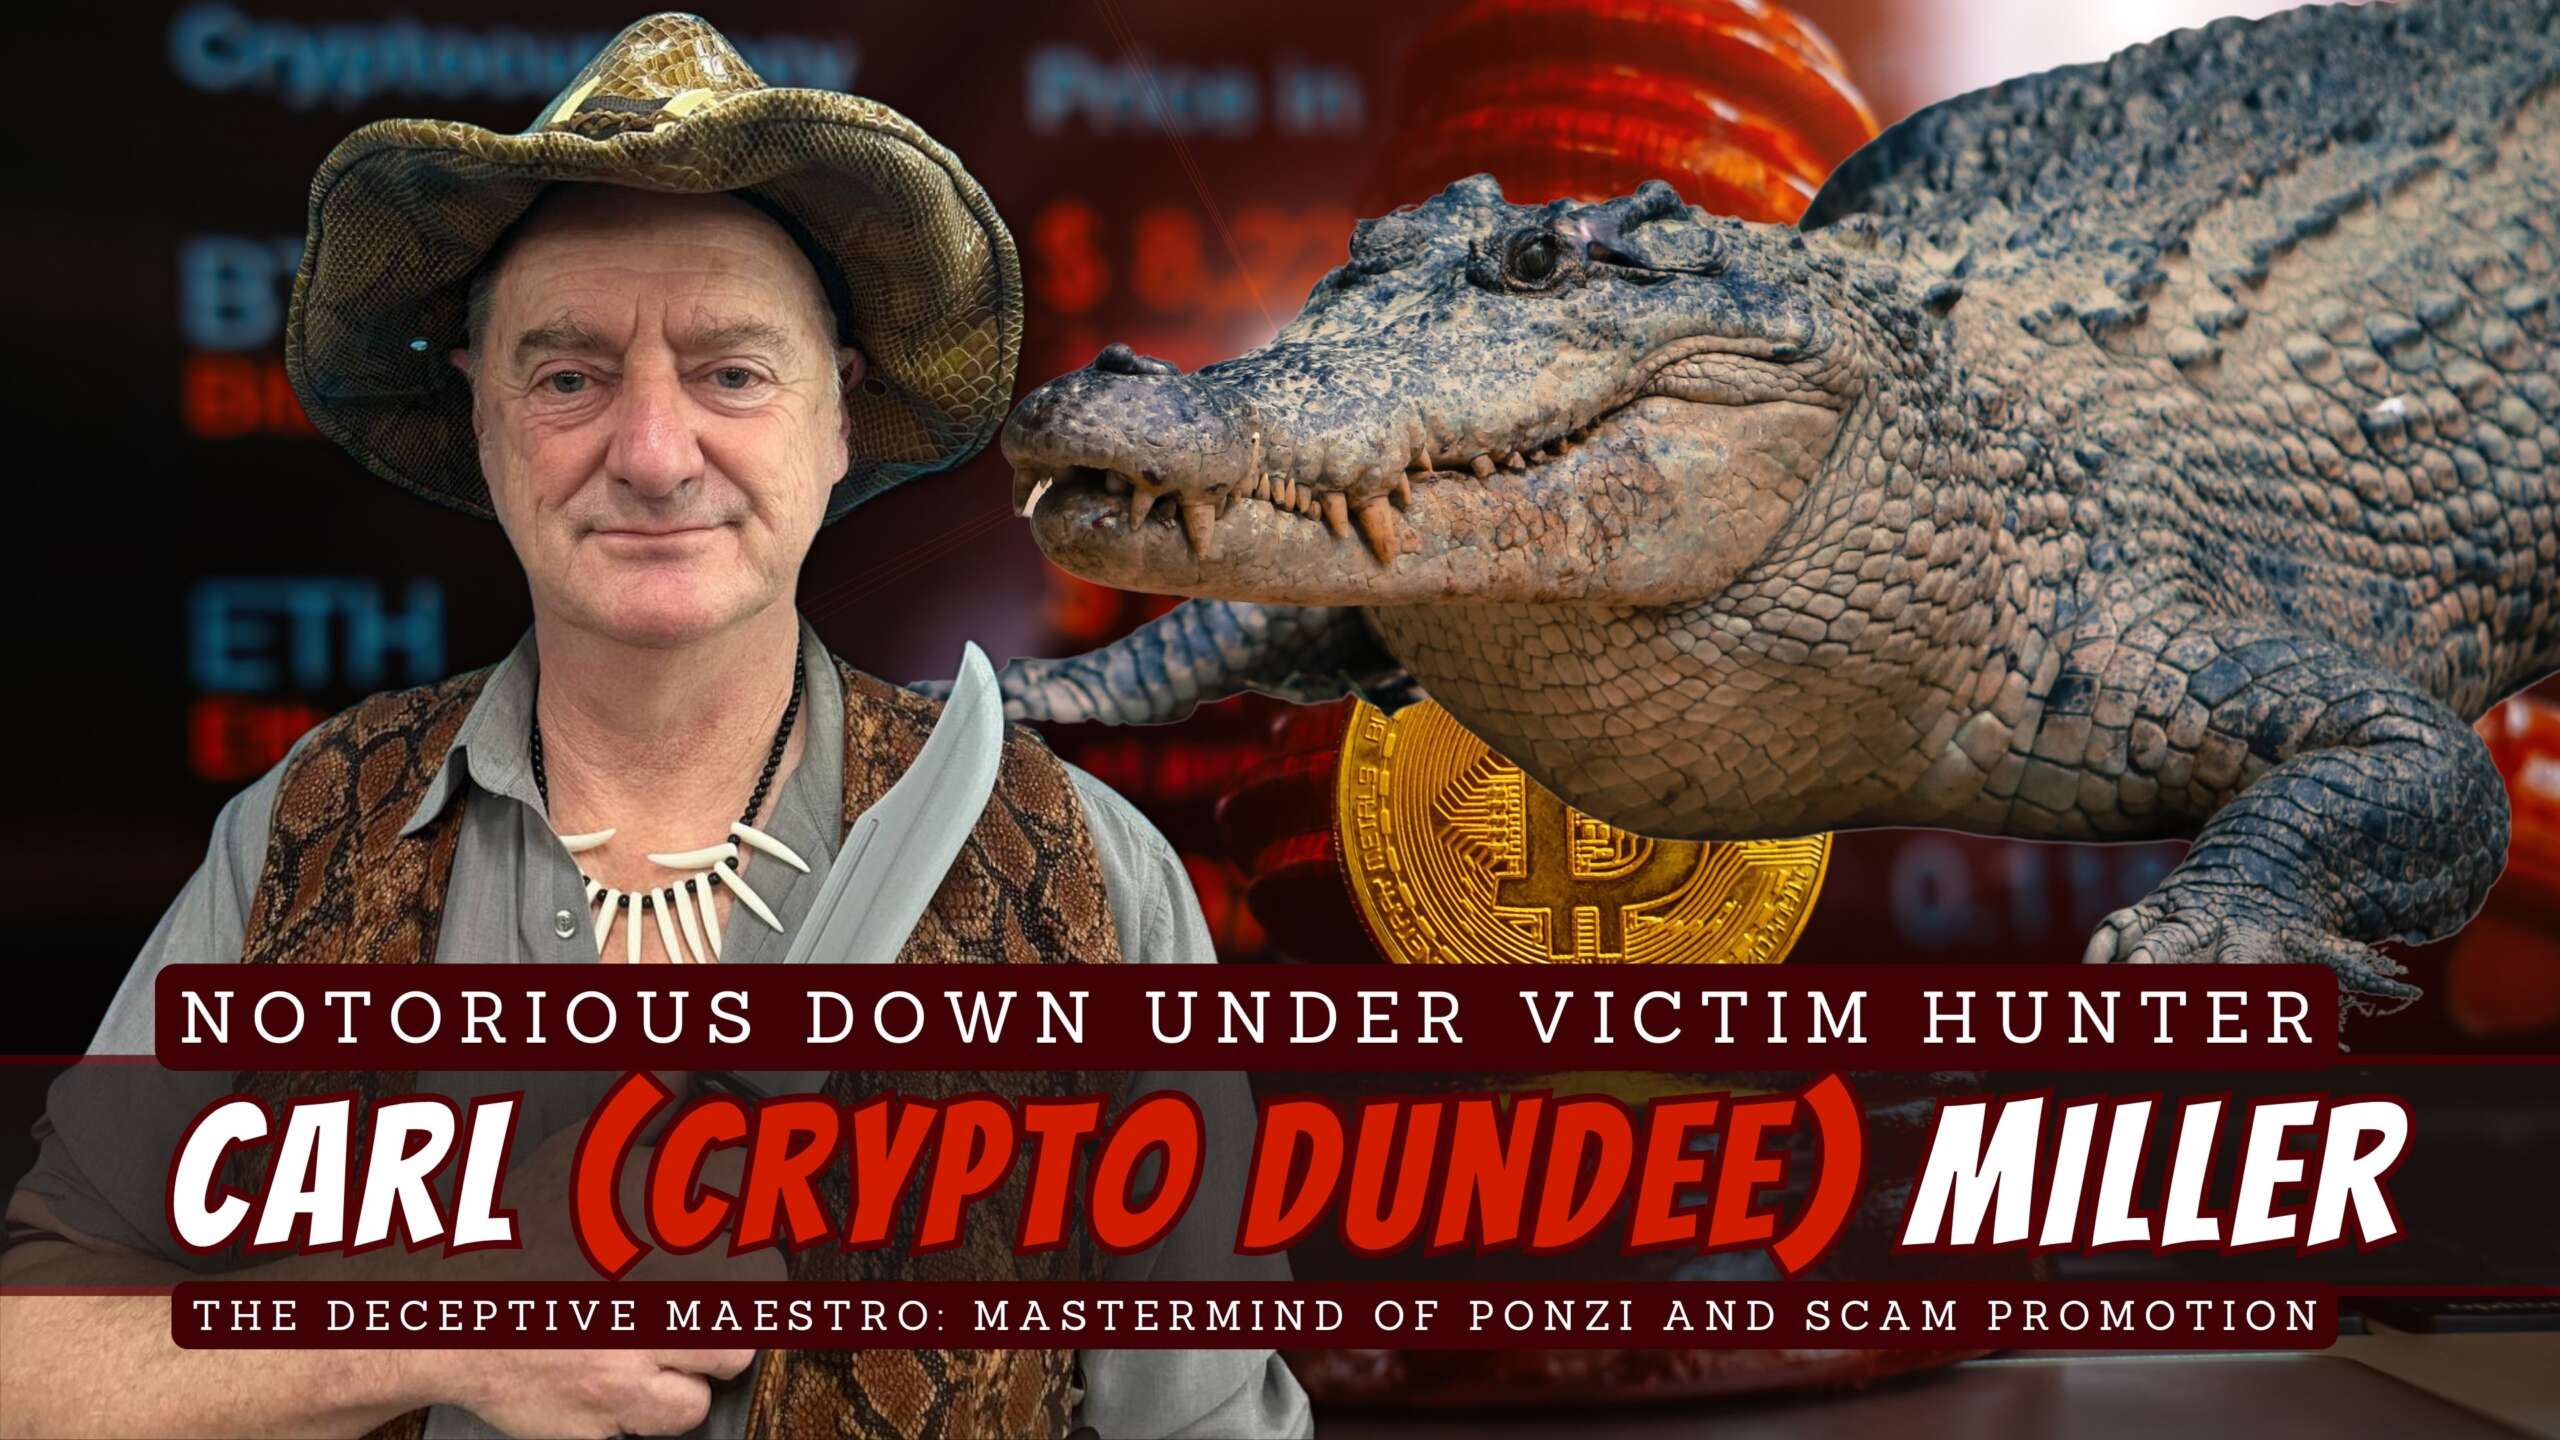 Exposing Crypto Dundee Carl Miller Australias Ponzi Scheme Crusader The Downunder Victim Hunter Entrepreneur Decision Maker Connector Podcaster Educator